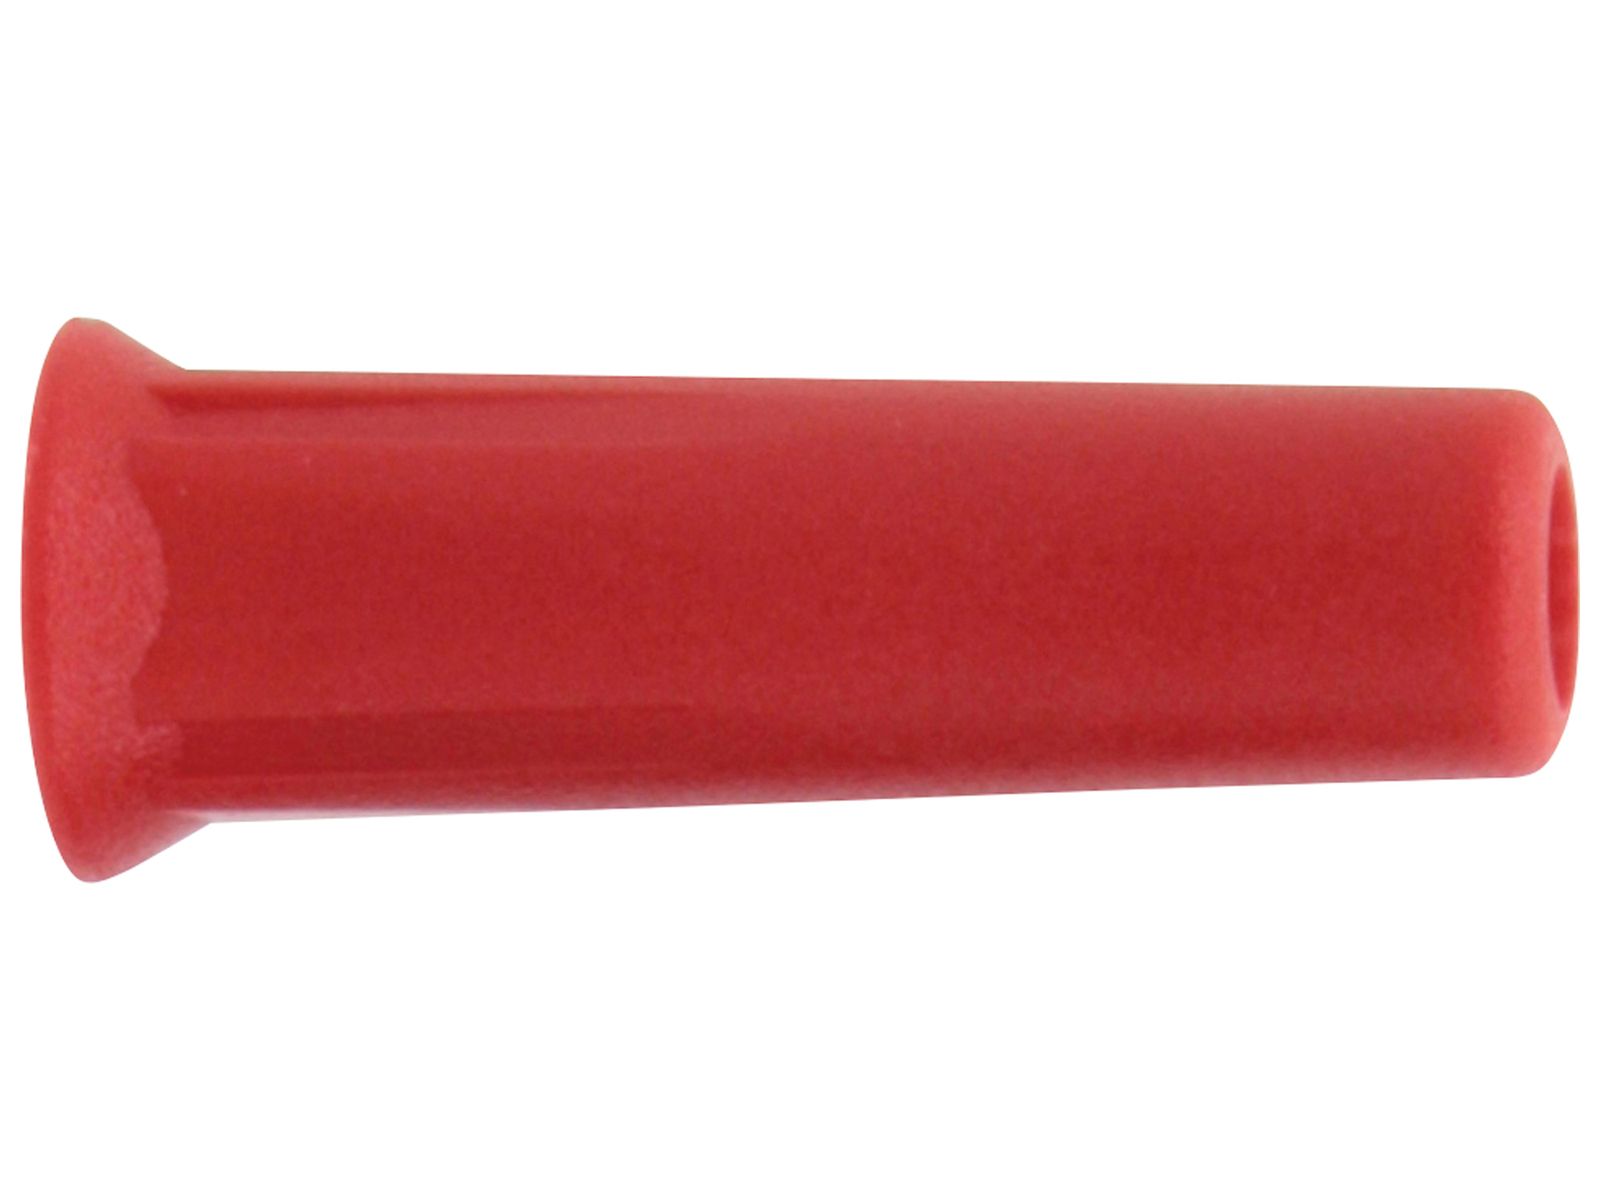 DONAU ELEKTRONIK Bananenkupplung, 4mm, rot, 3010 von Donau Elektronik